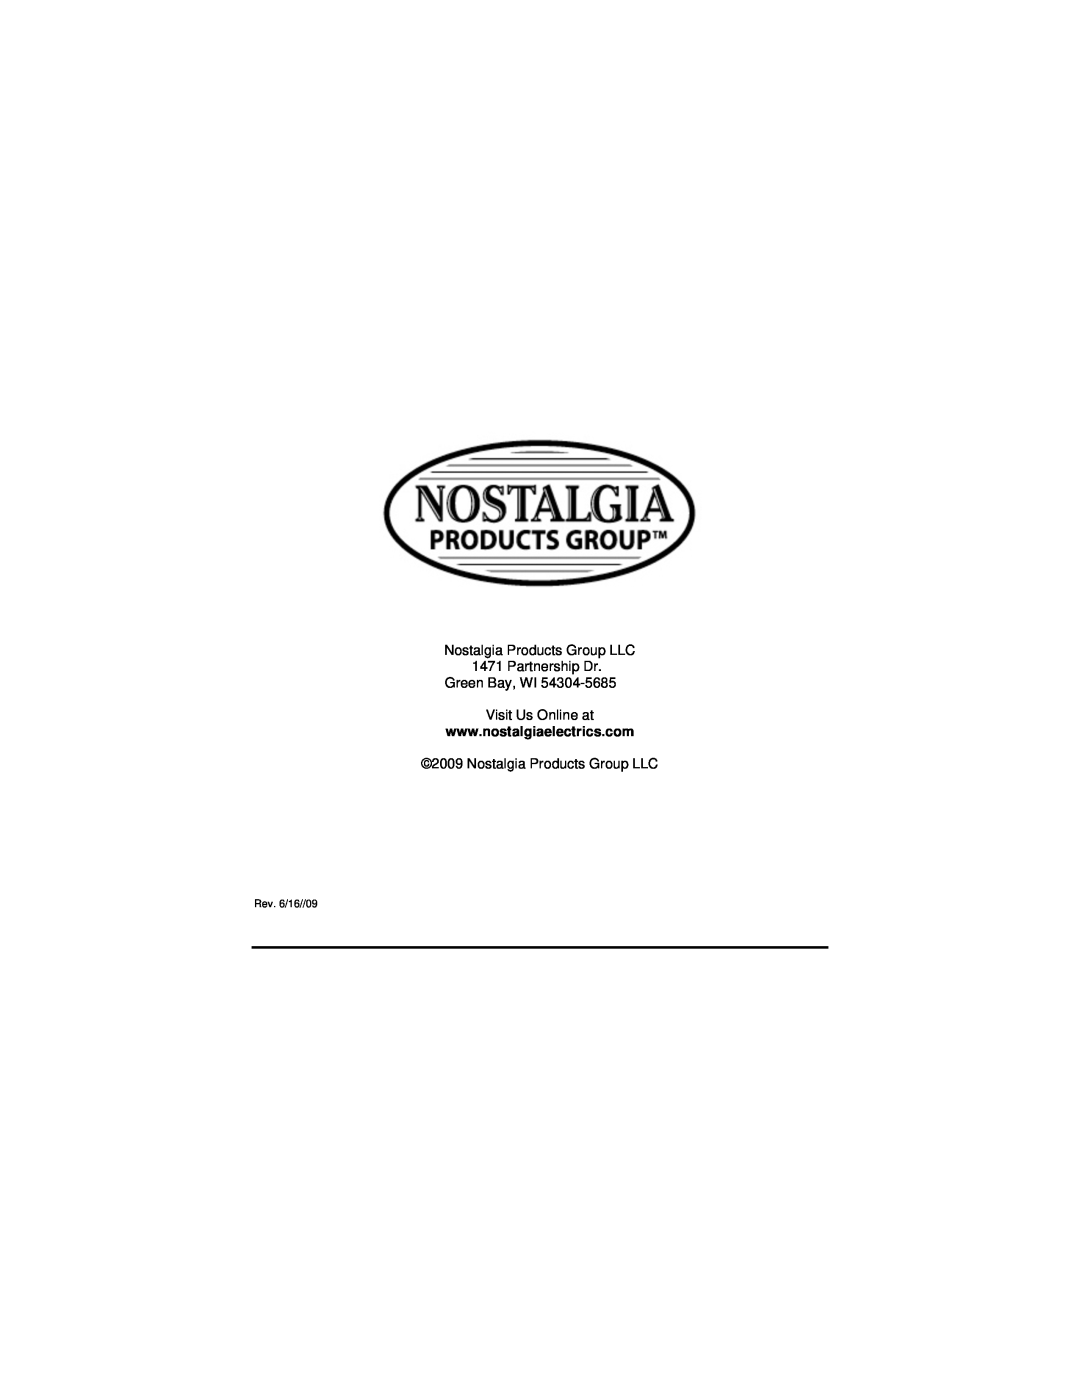 Nostalgia Electrics RSM-602 manual Nostalgia Products Group LLC 1471 Partnership Dr, Green Bay, WI Visit Us Online at 